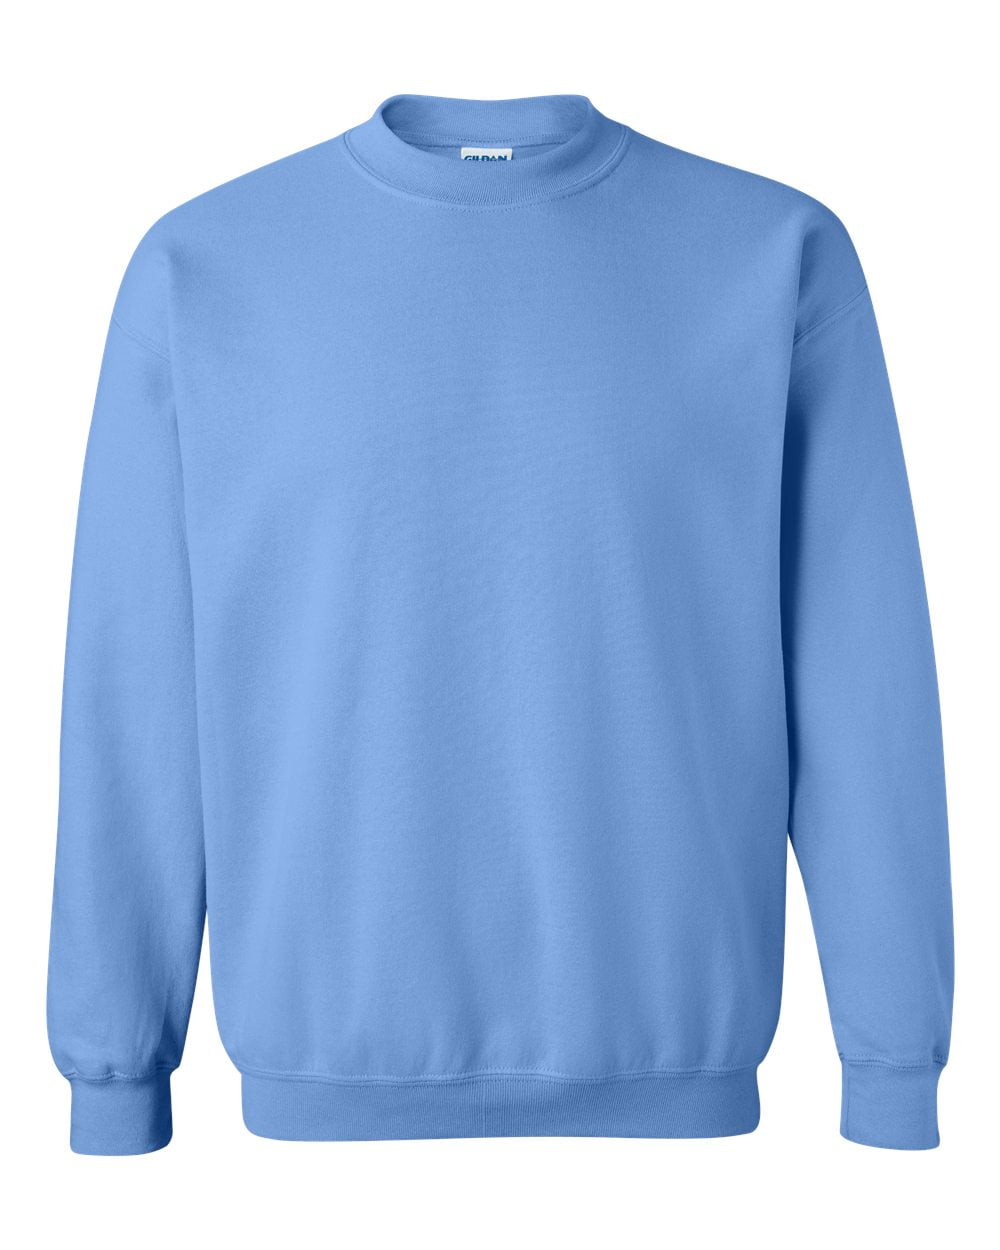 Gildan Heavy Blend Adult Crew Neck Pullover Sweatshirt Sweater Workwear Uniform